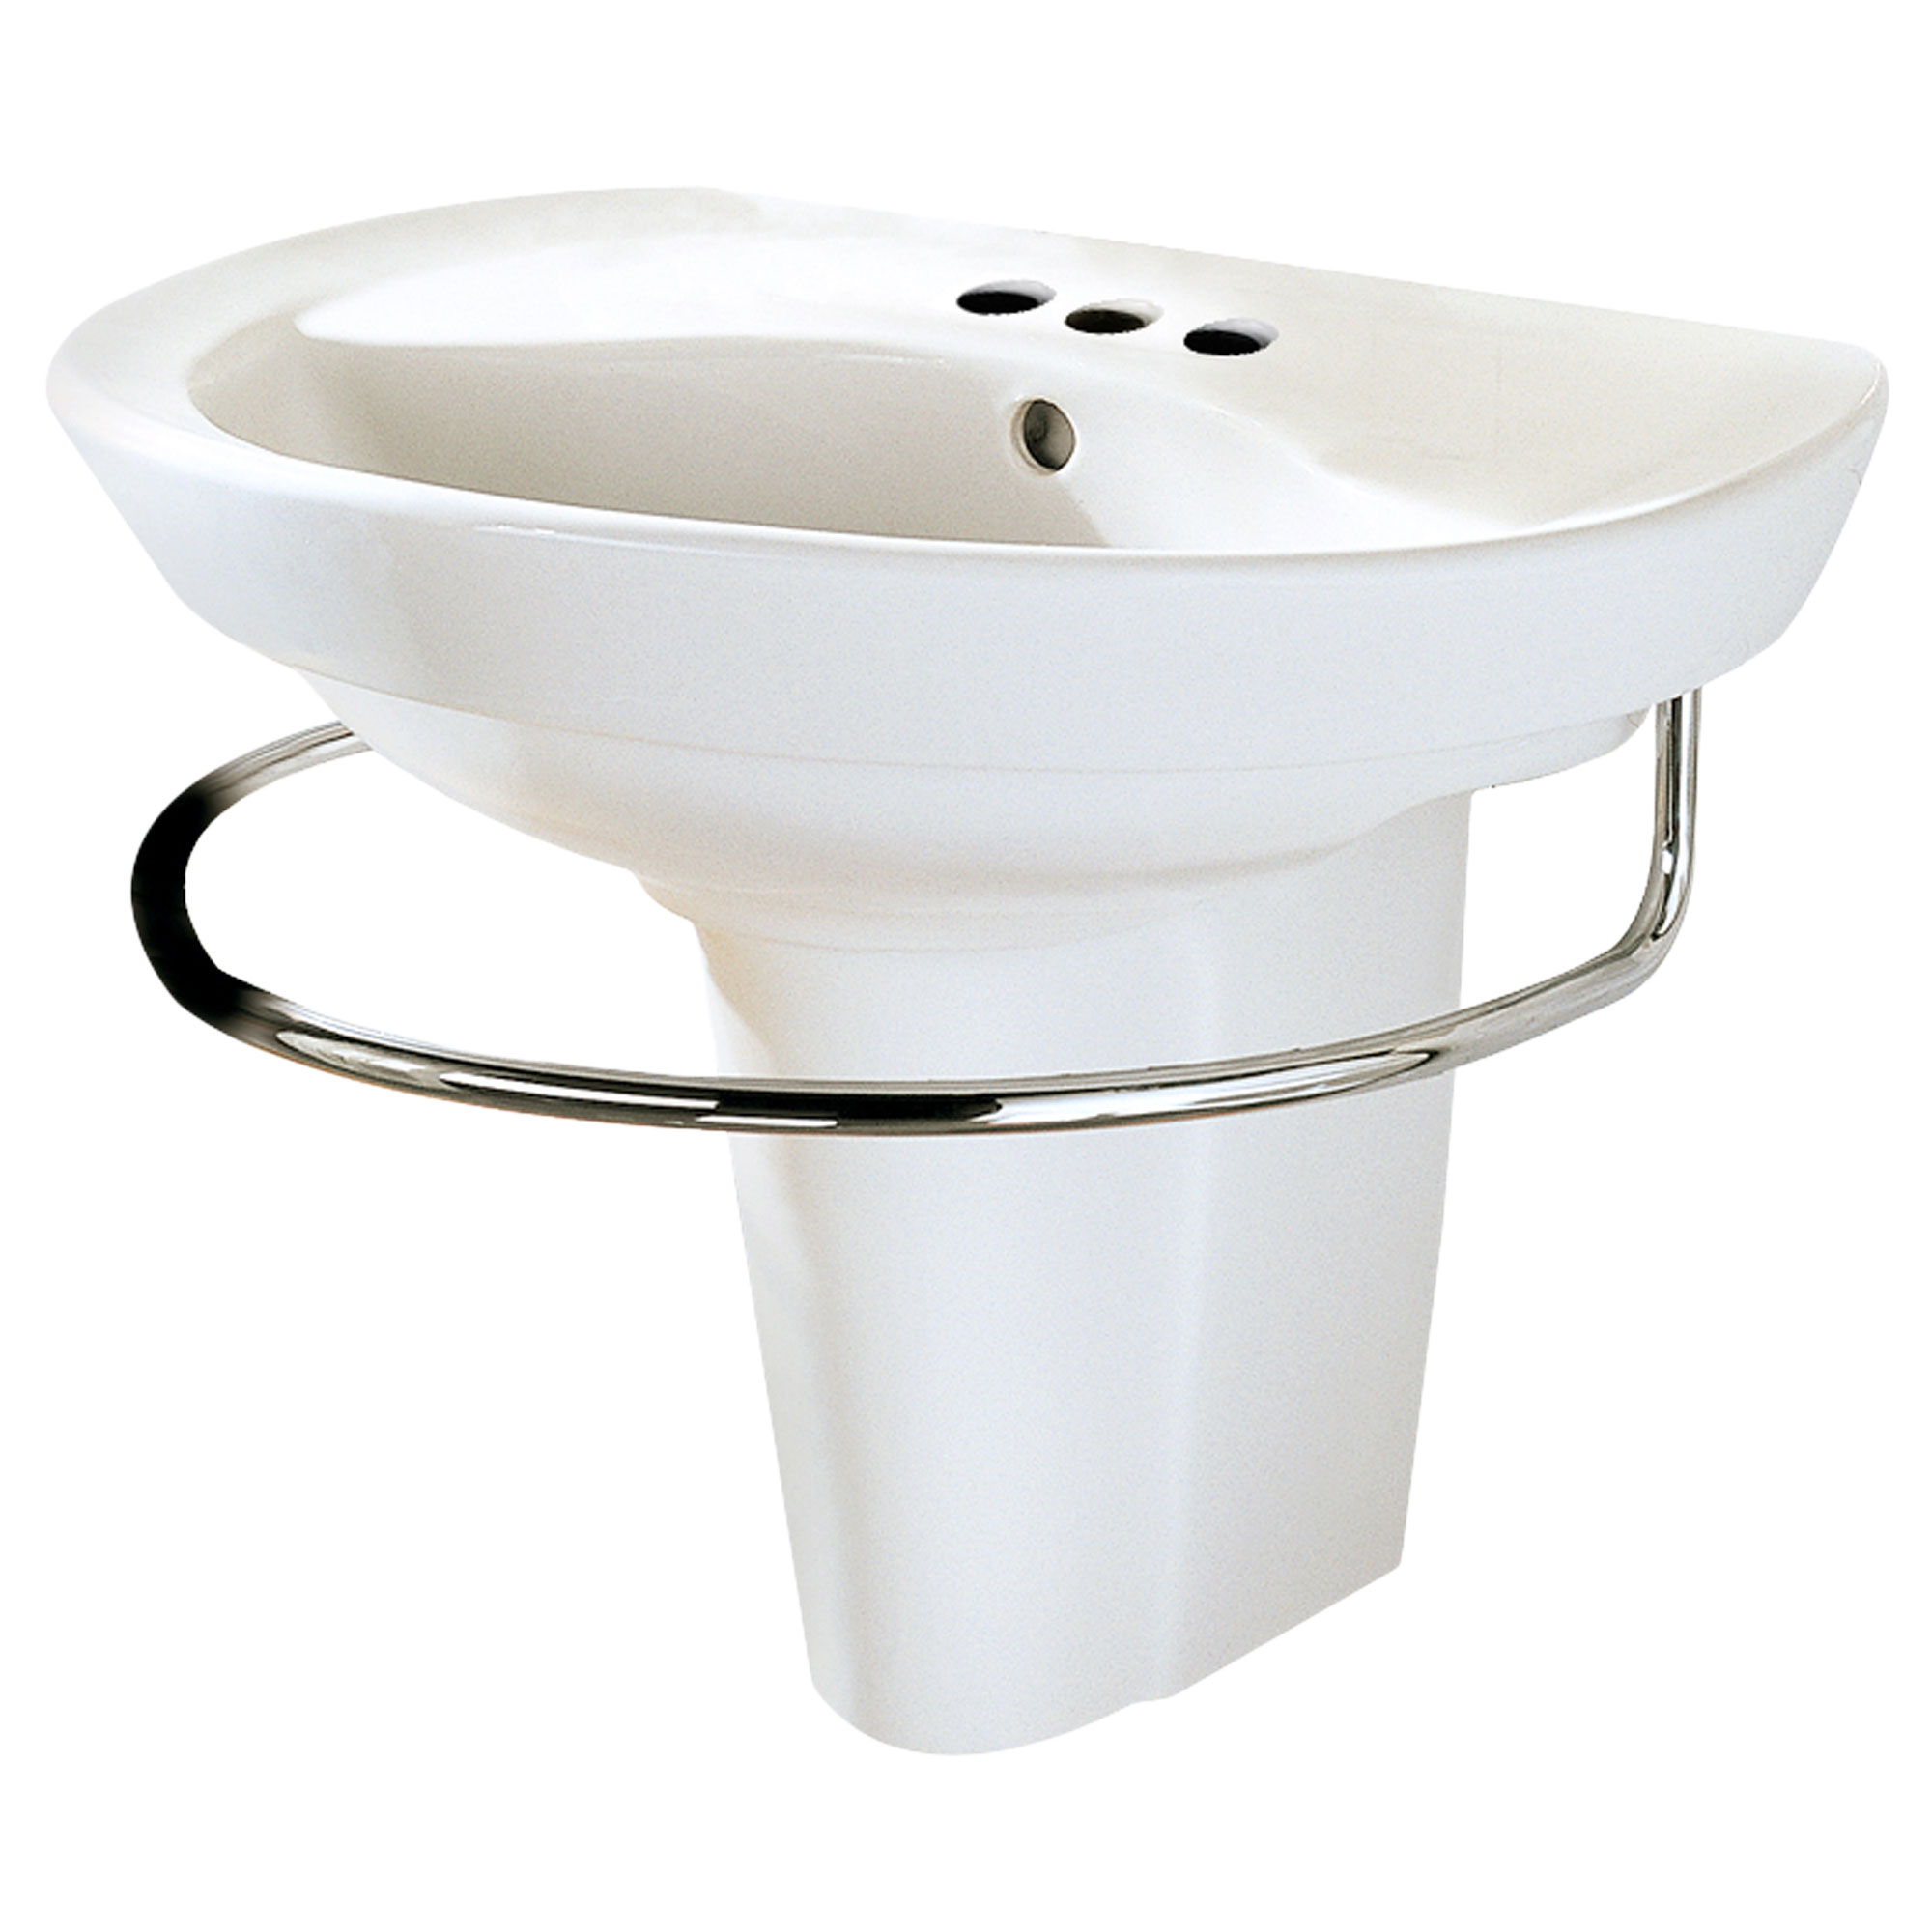 Ravenna® 4-Inch Centerset Wall-Hung Sink and Semi-Pedestal Leg Combination